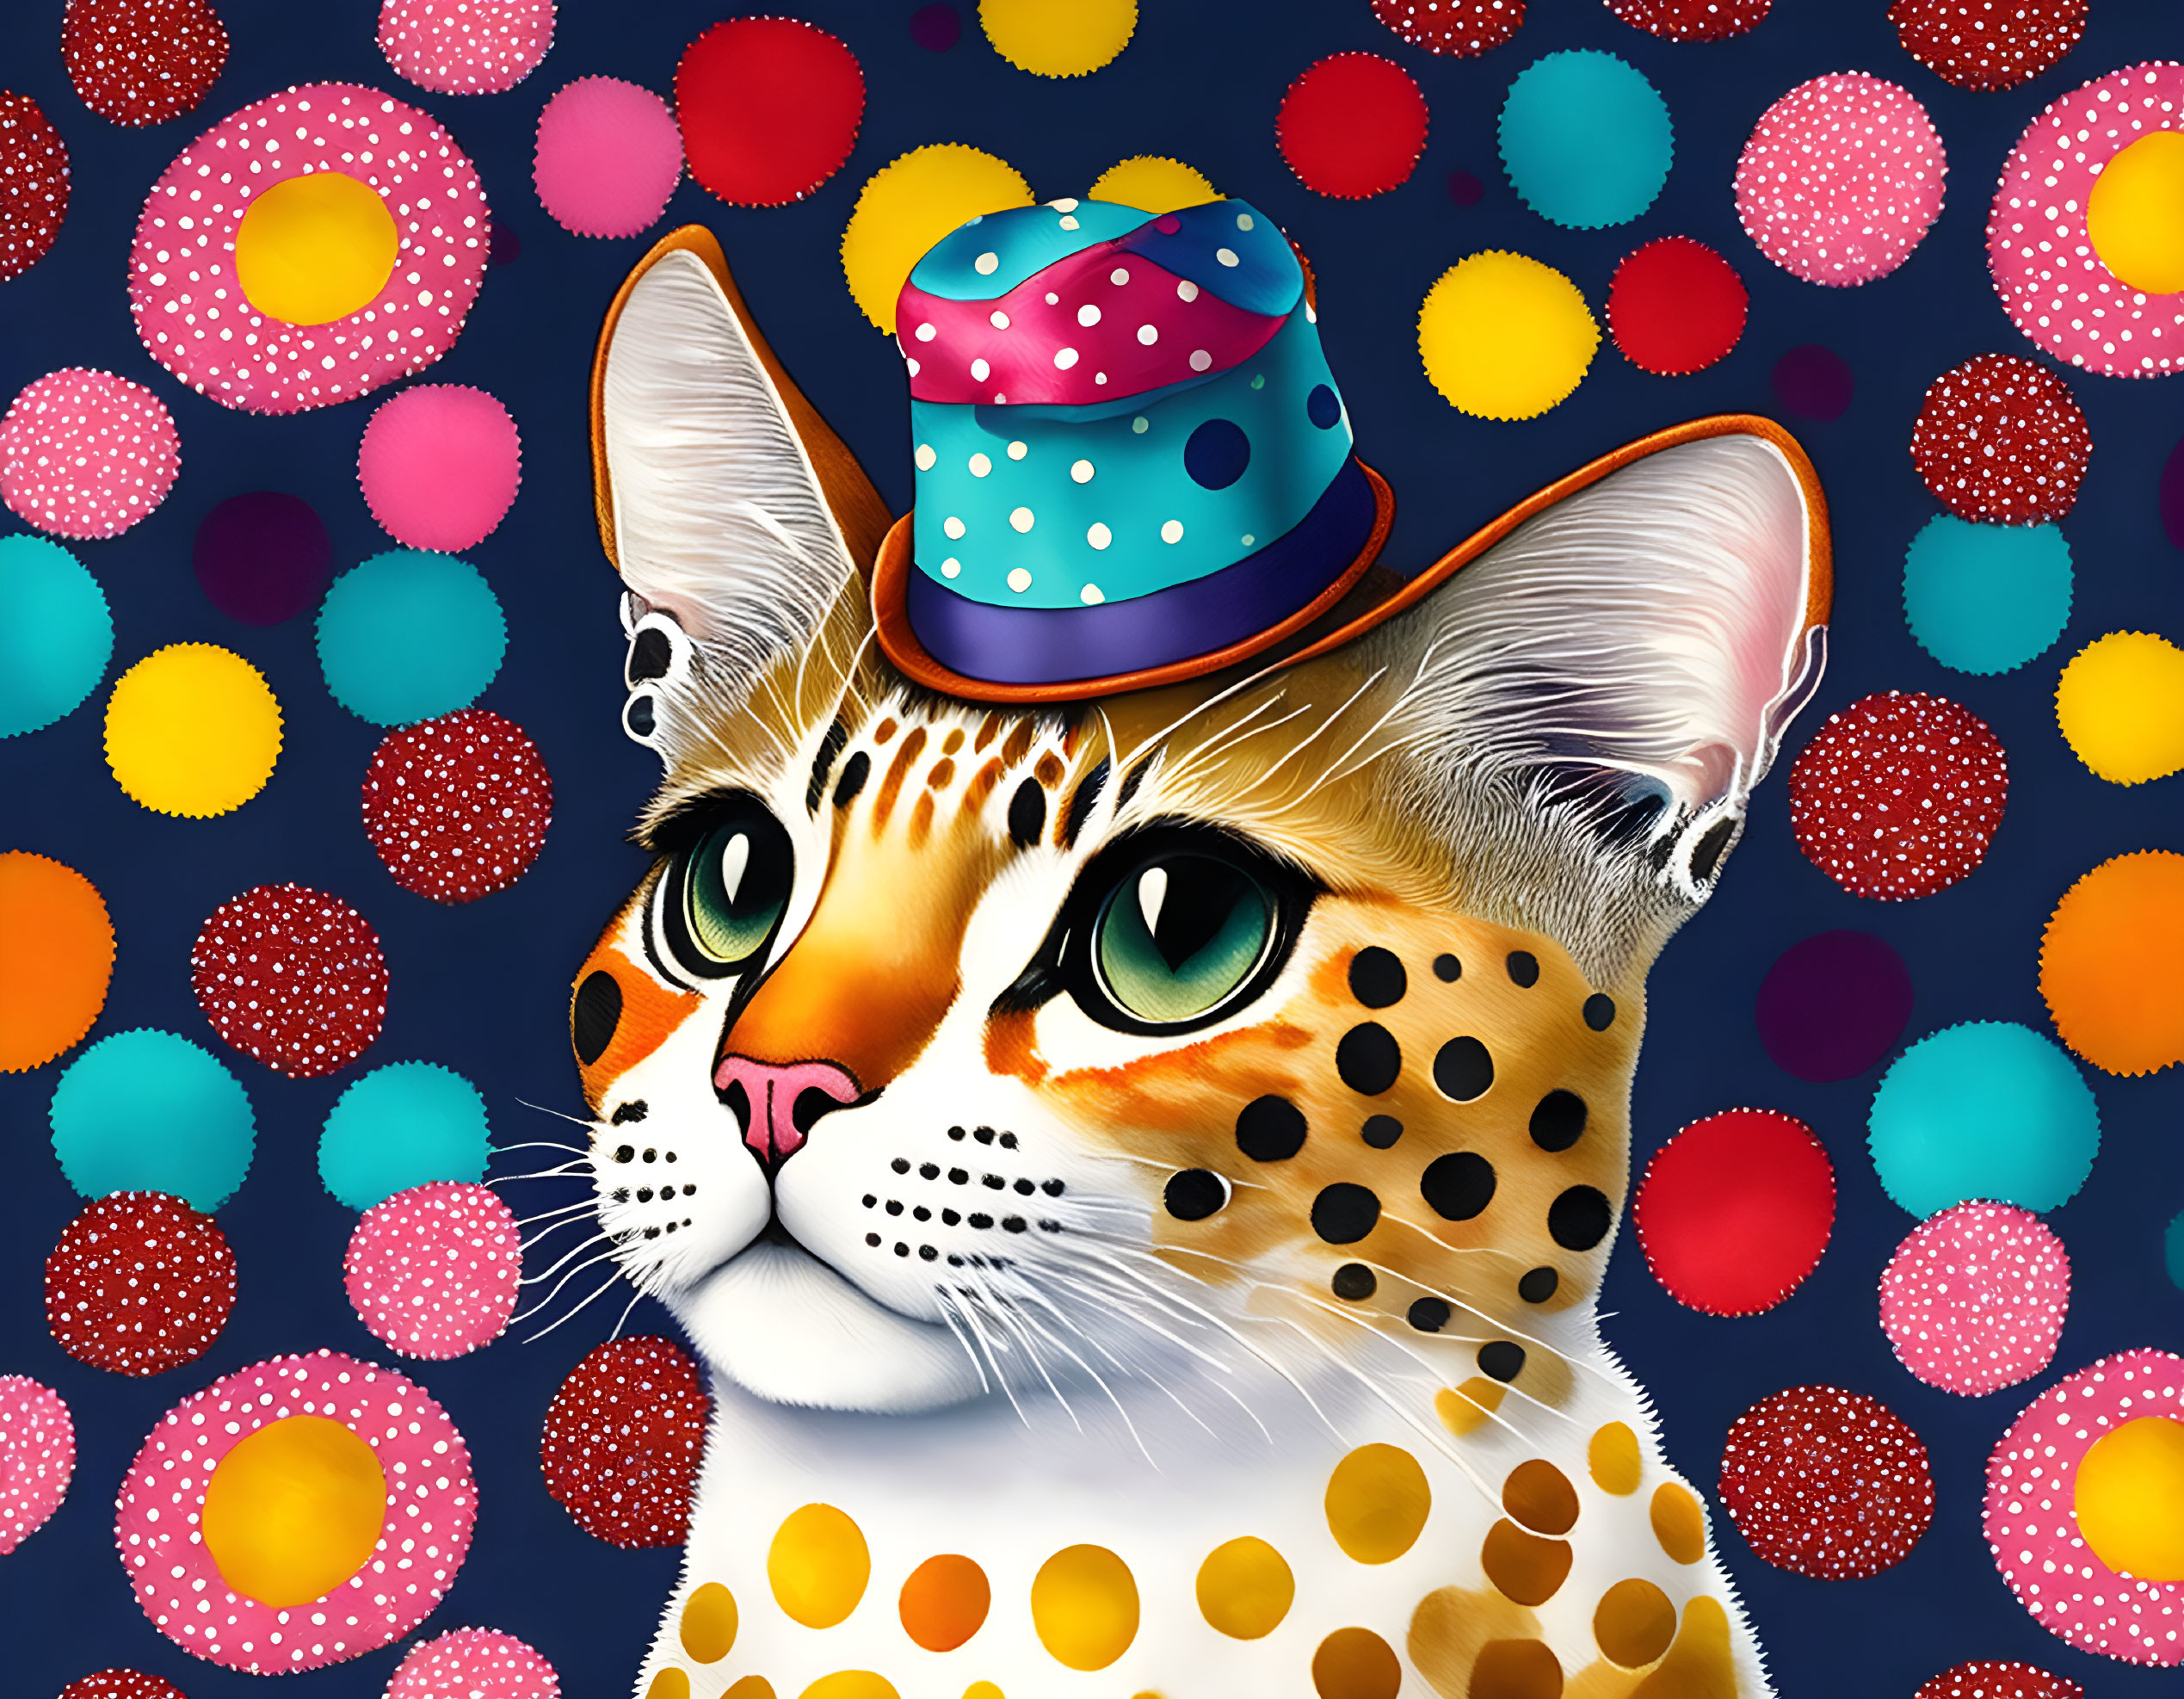 polka dot cat with a polka dot hat